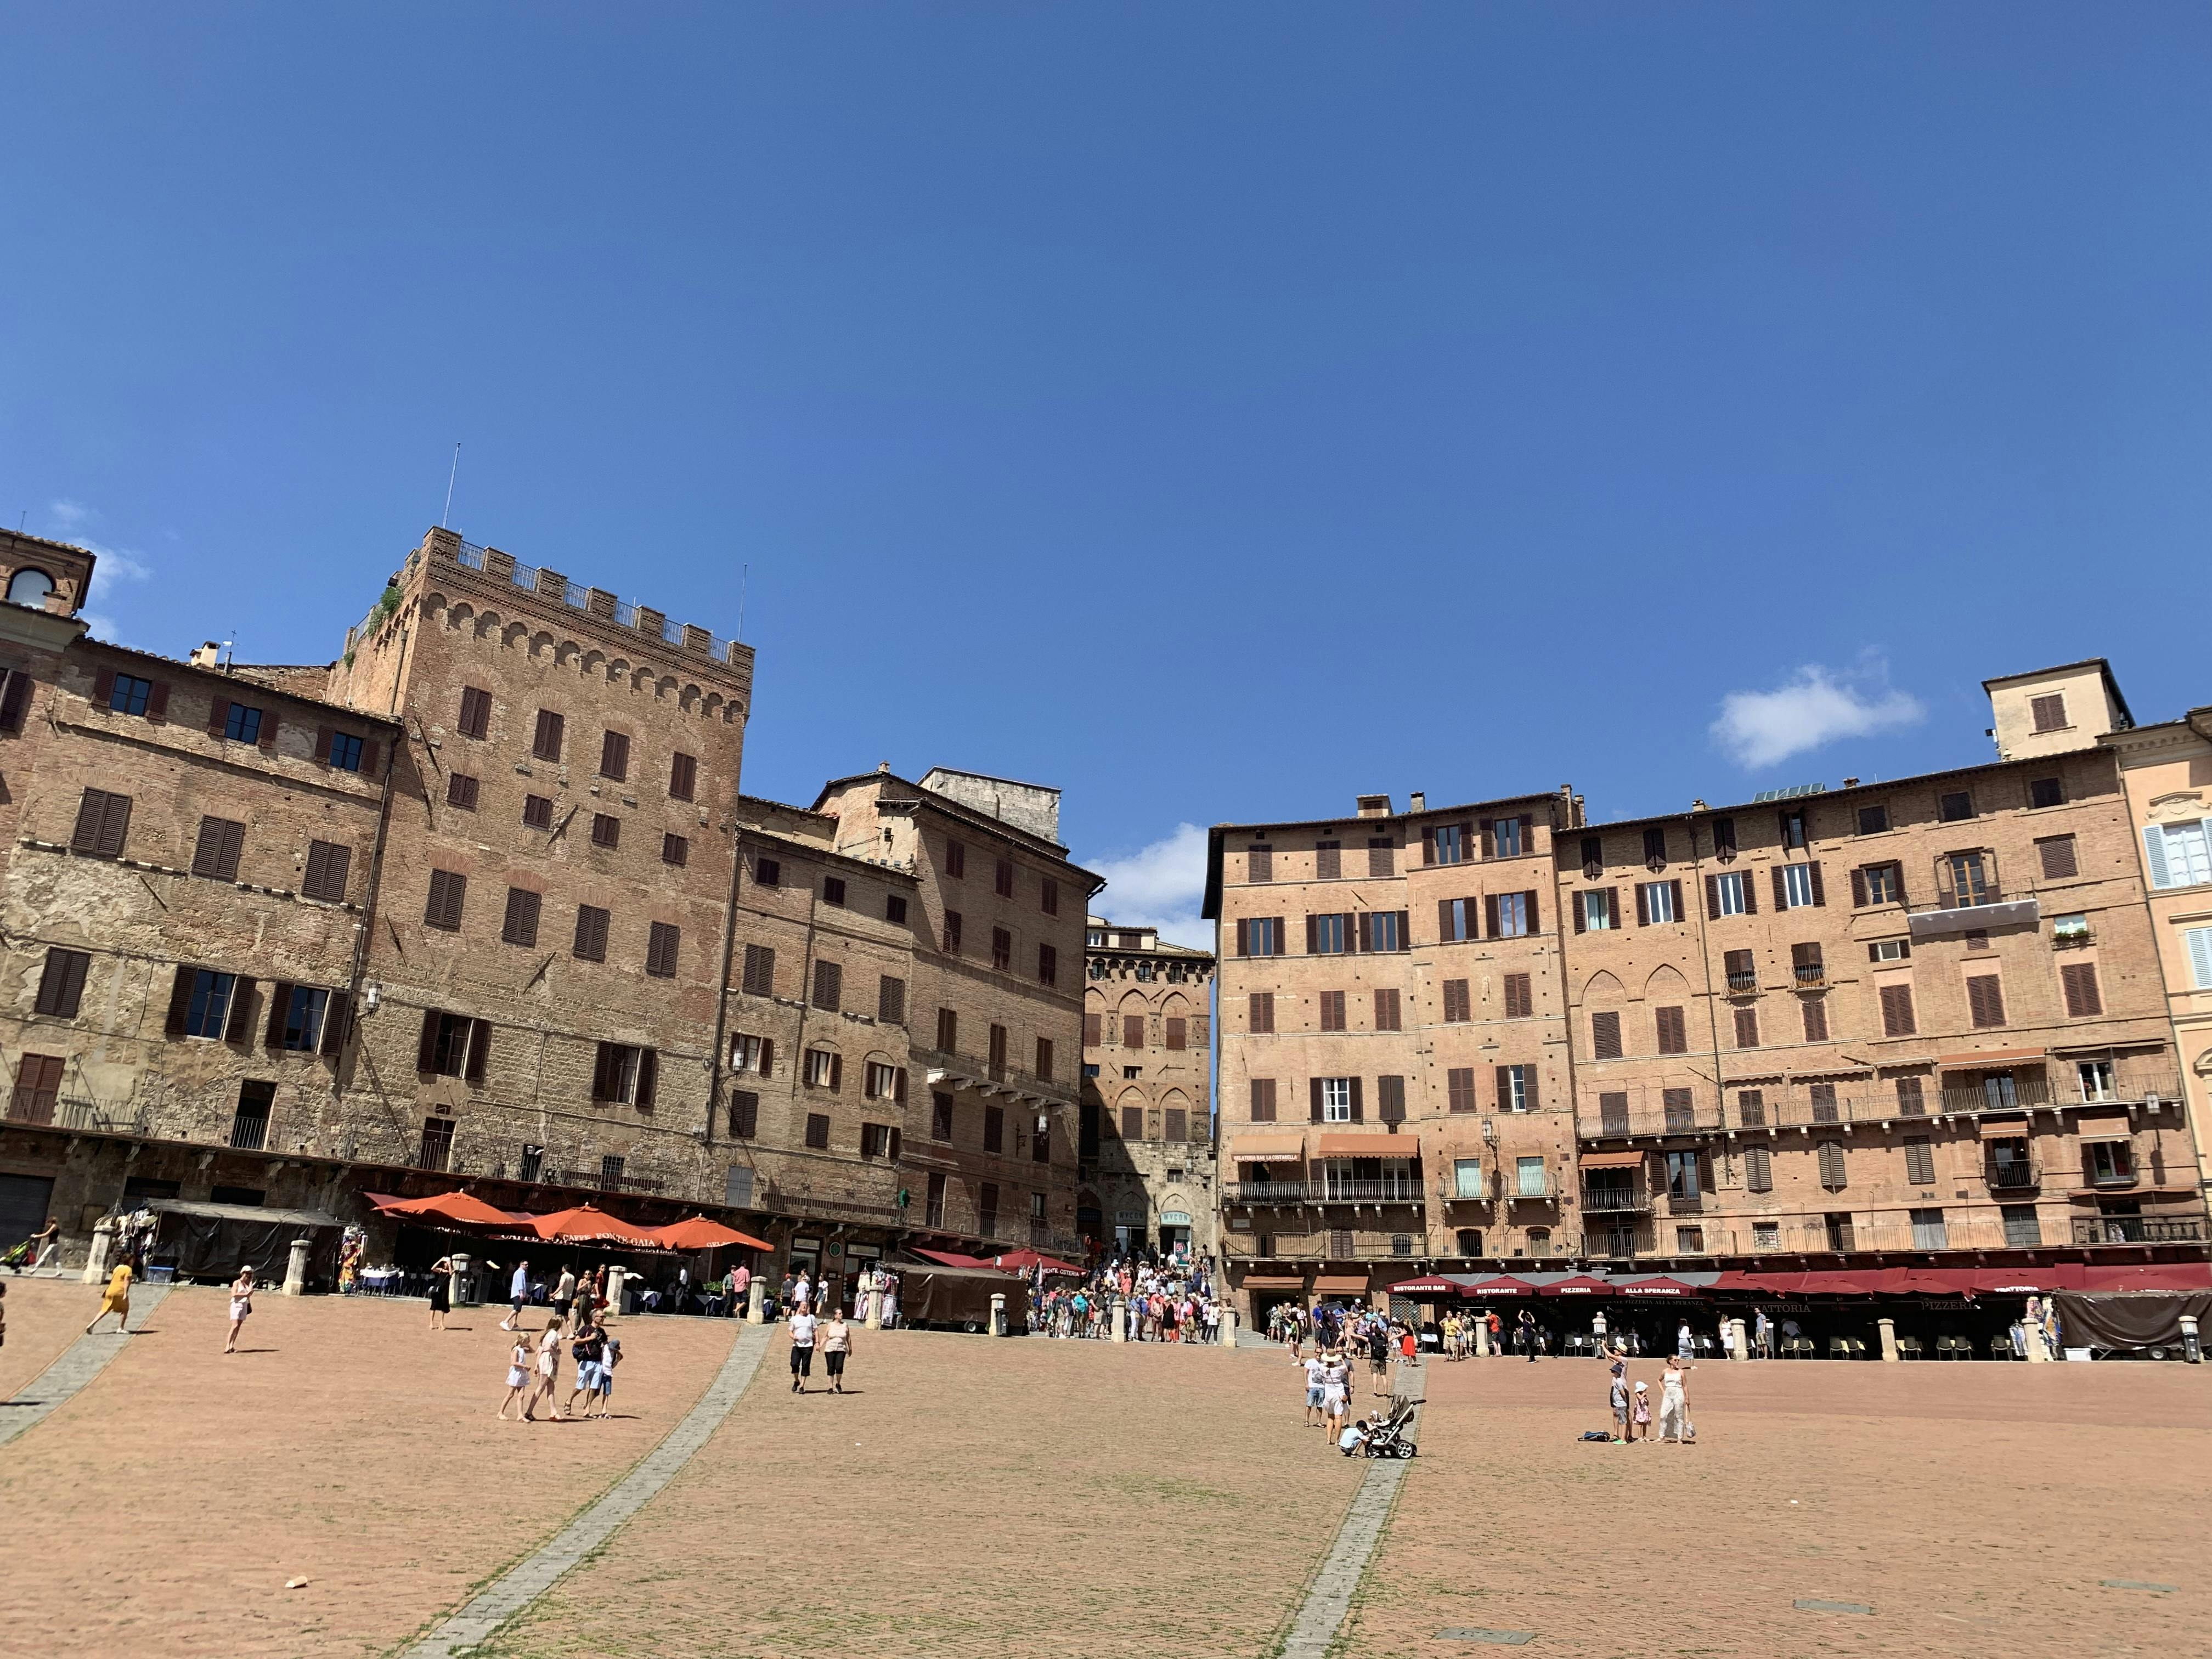 Ausflug nach Pisa, Siena, San Gimignano und Chianti mit optionalem Schiefen Turm